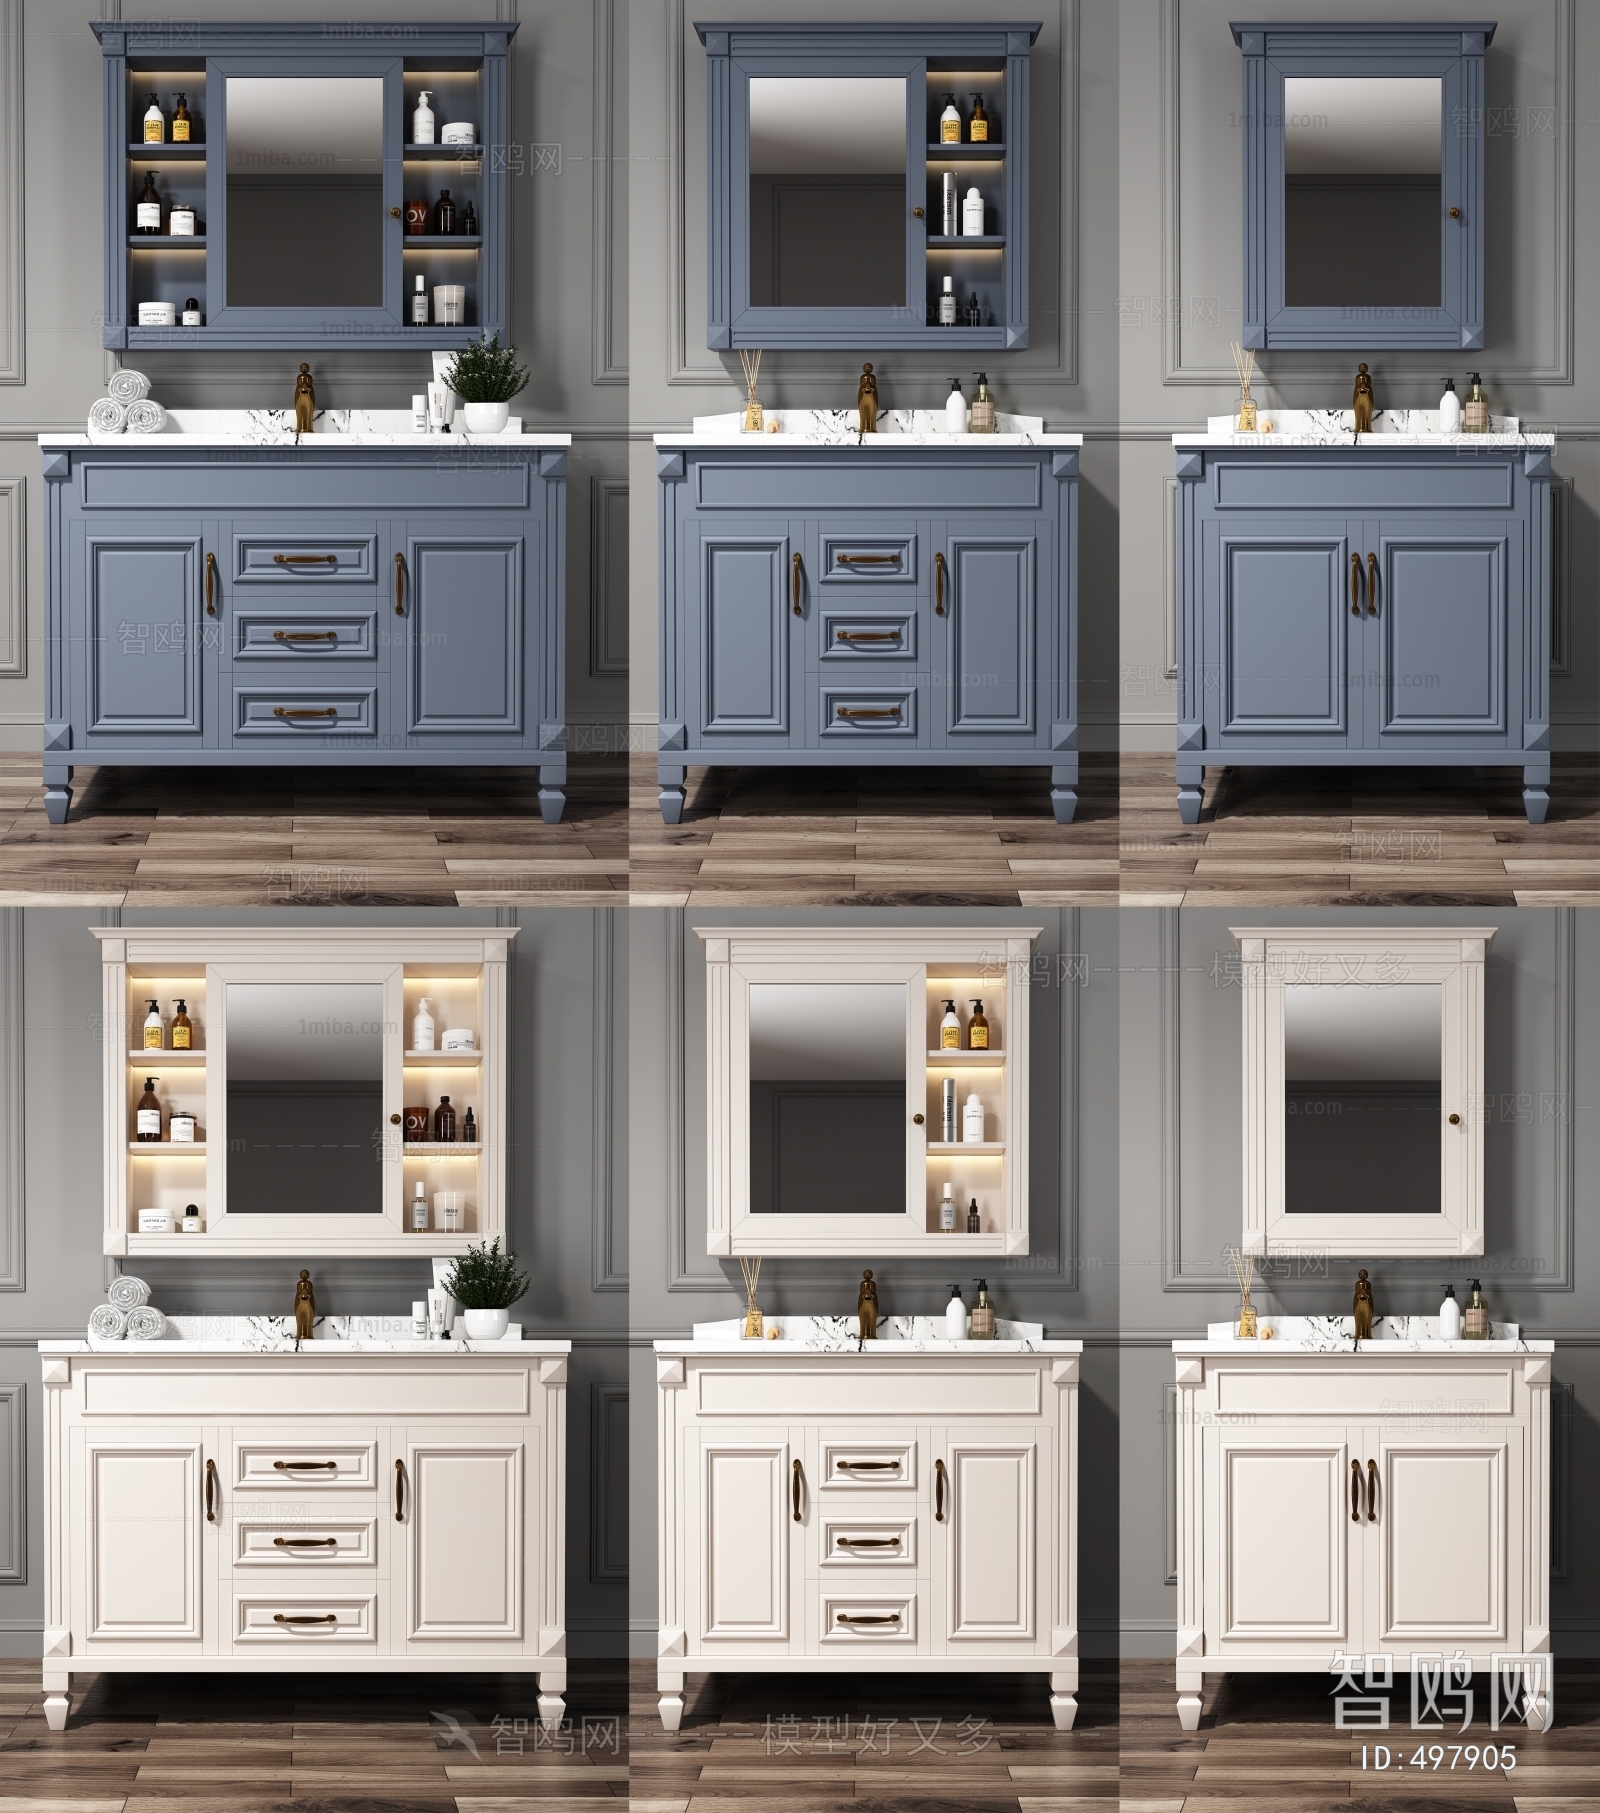 American Style Bathroom Cabinet